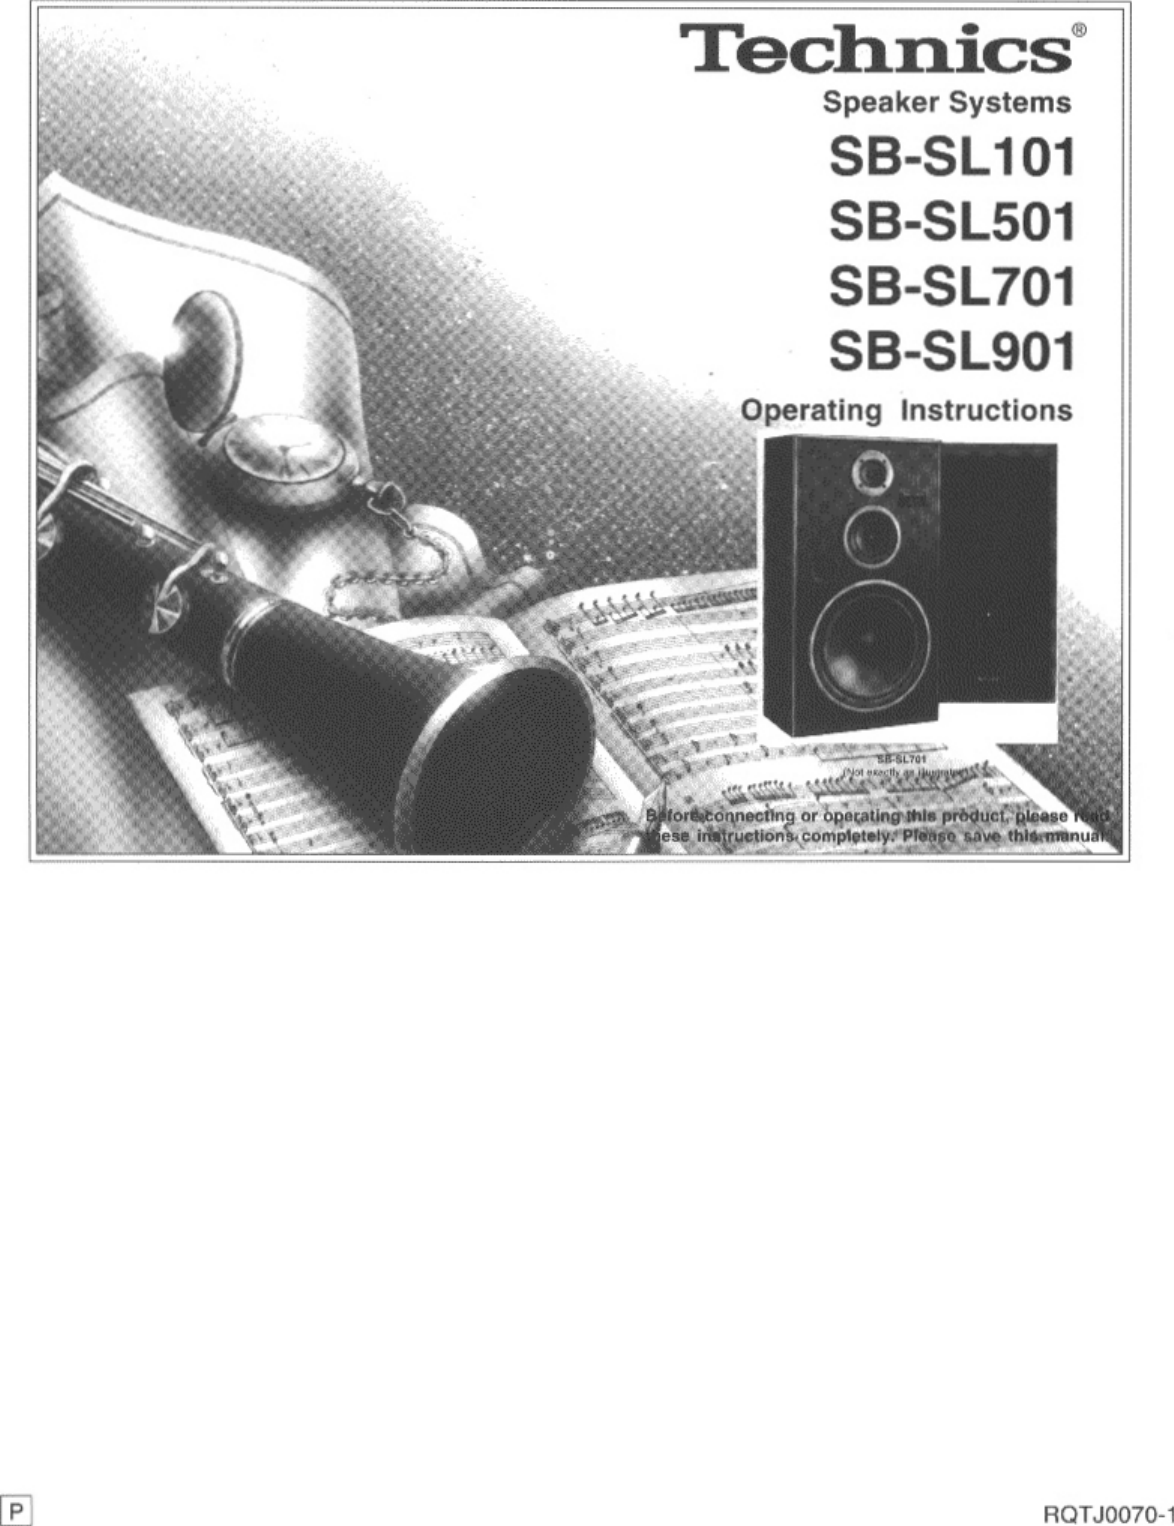 Page 1 of 4 - Technics Technics-Sb-Sl101-Users-Manual- PDF File Created From A TIFF .  Technics-sb-sl101-users-manual